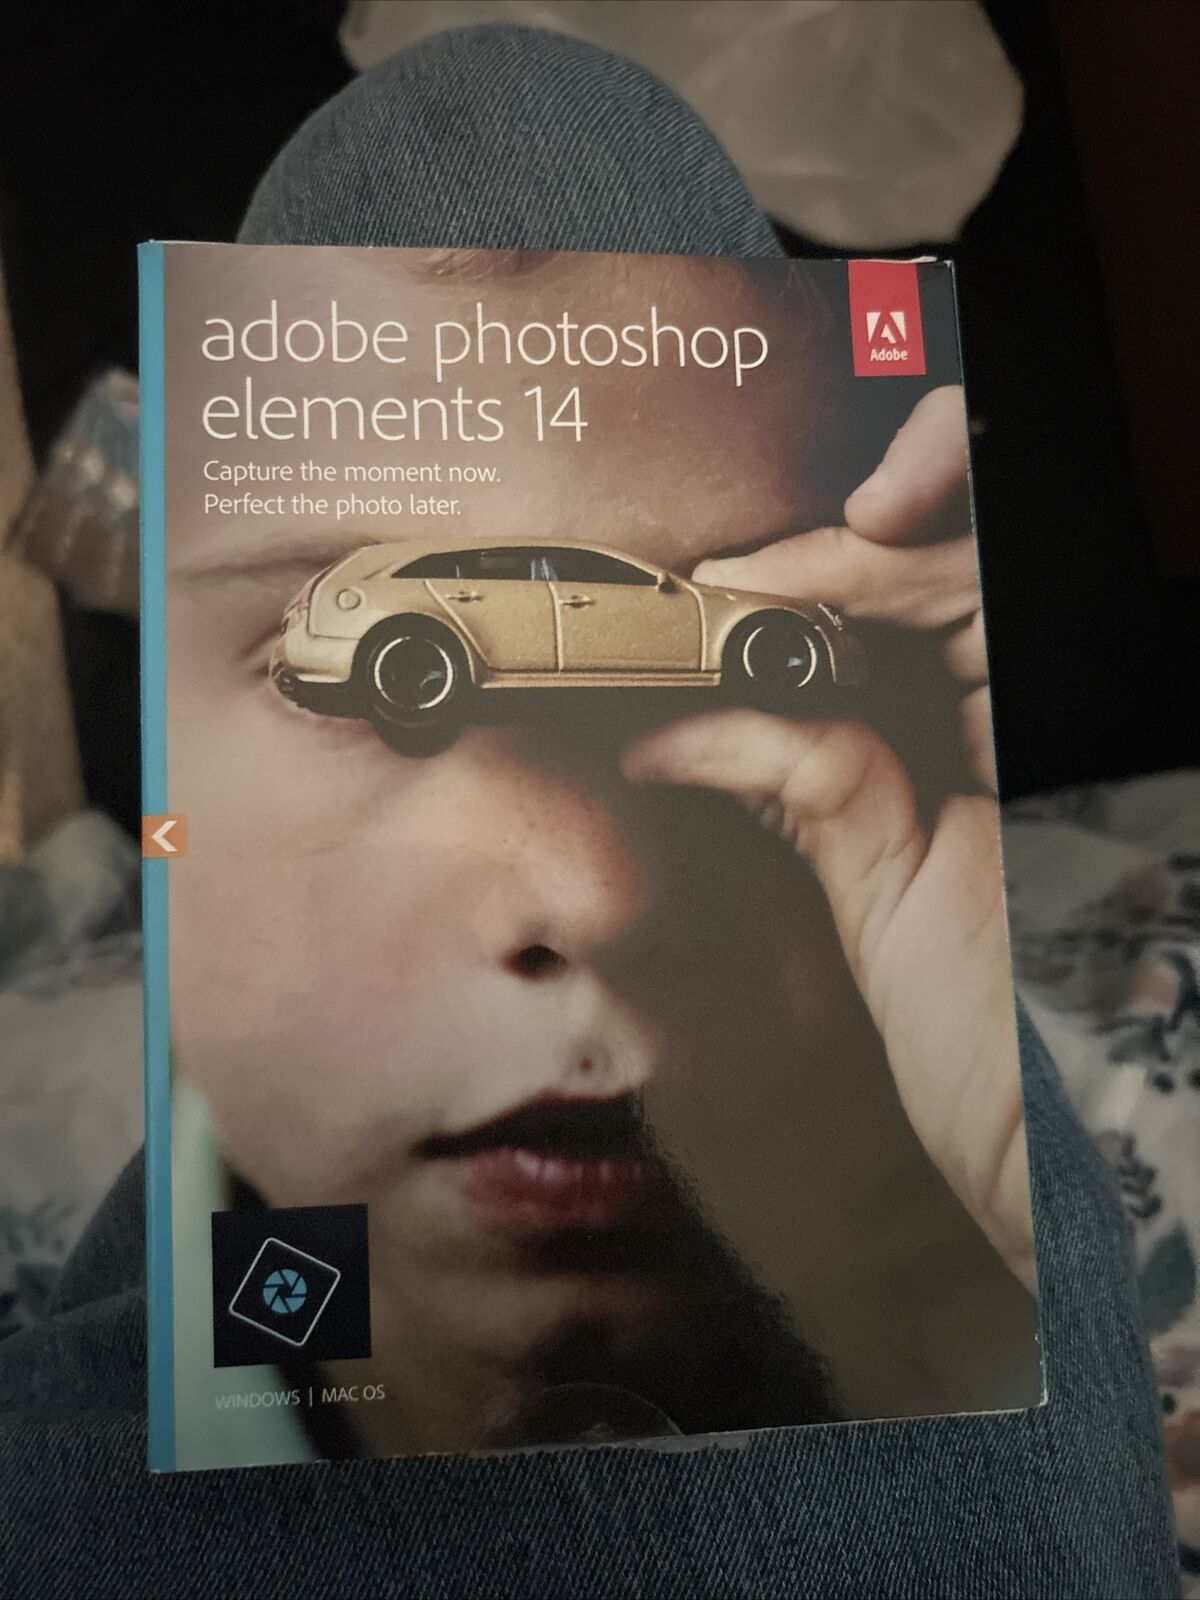 ADOBE Photoshop Elements 14 -  Full Retail Version - Both Windows / Mac OS DVDs